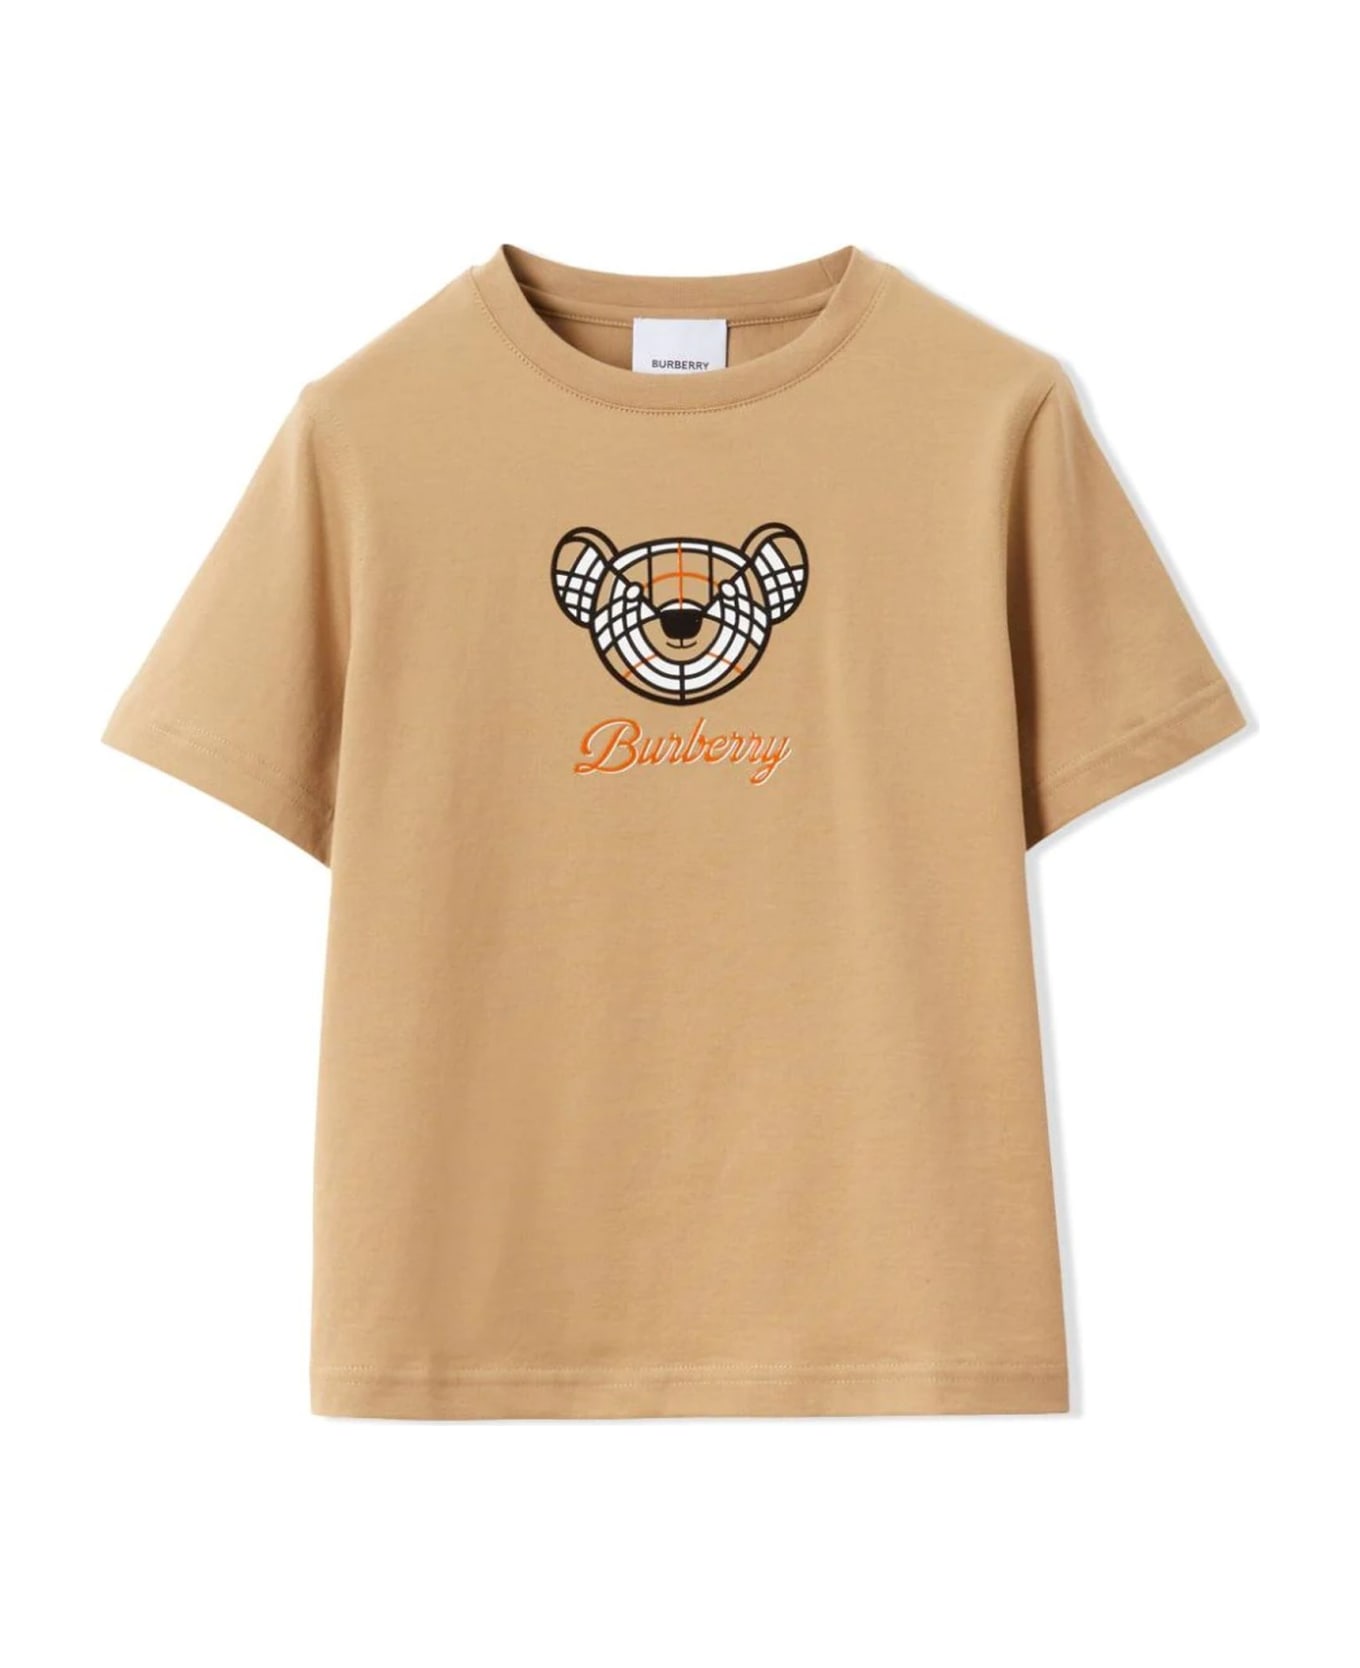 Burberry Beige Cotton T-shirt - Beige